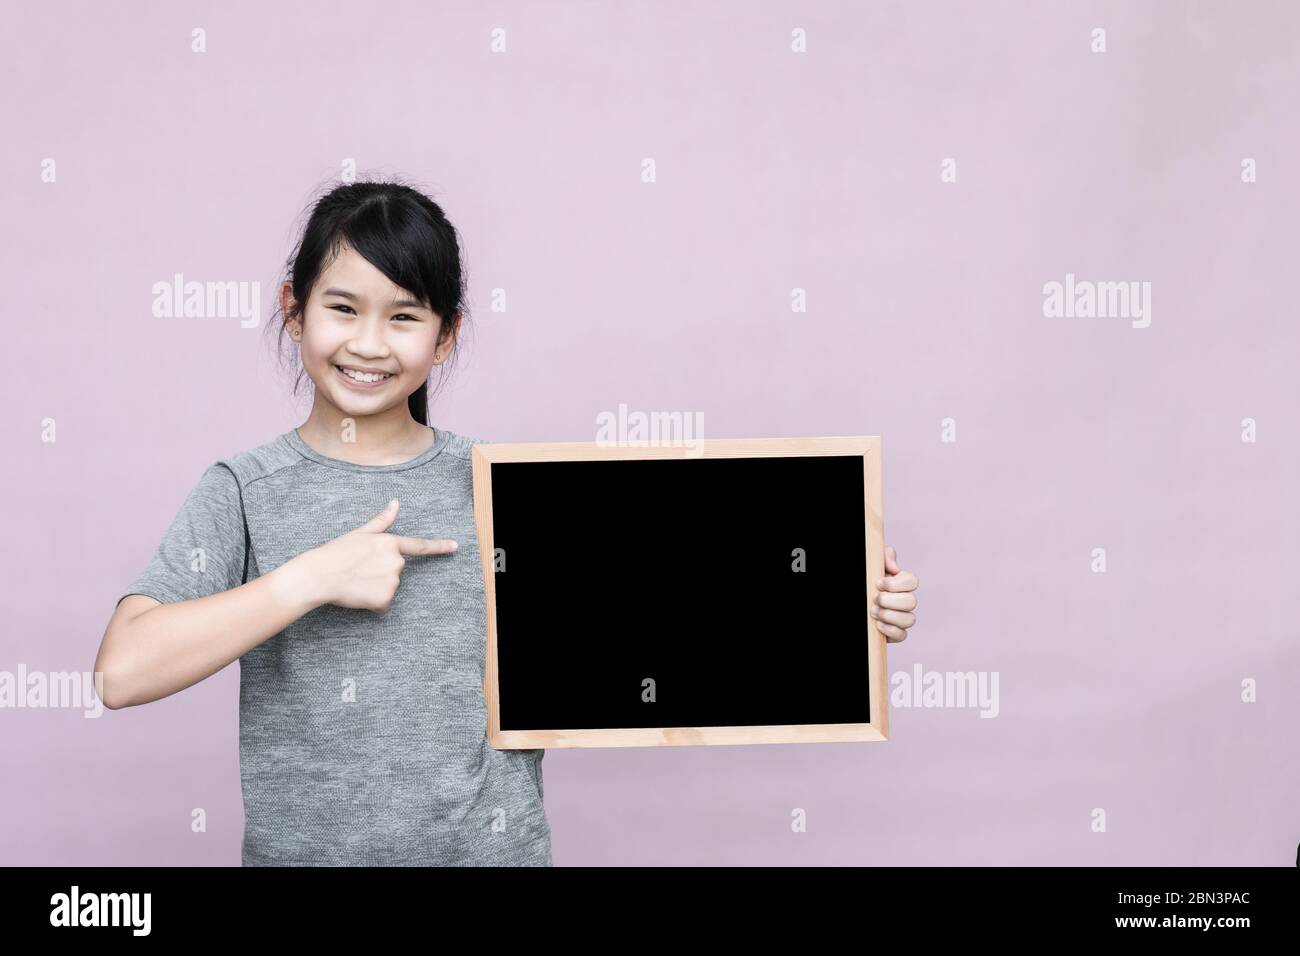 Little asian girl holding blackboard isolated on gray background. Stock Photo